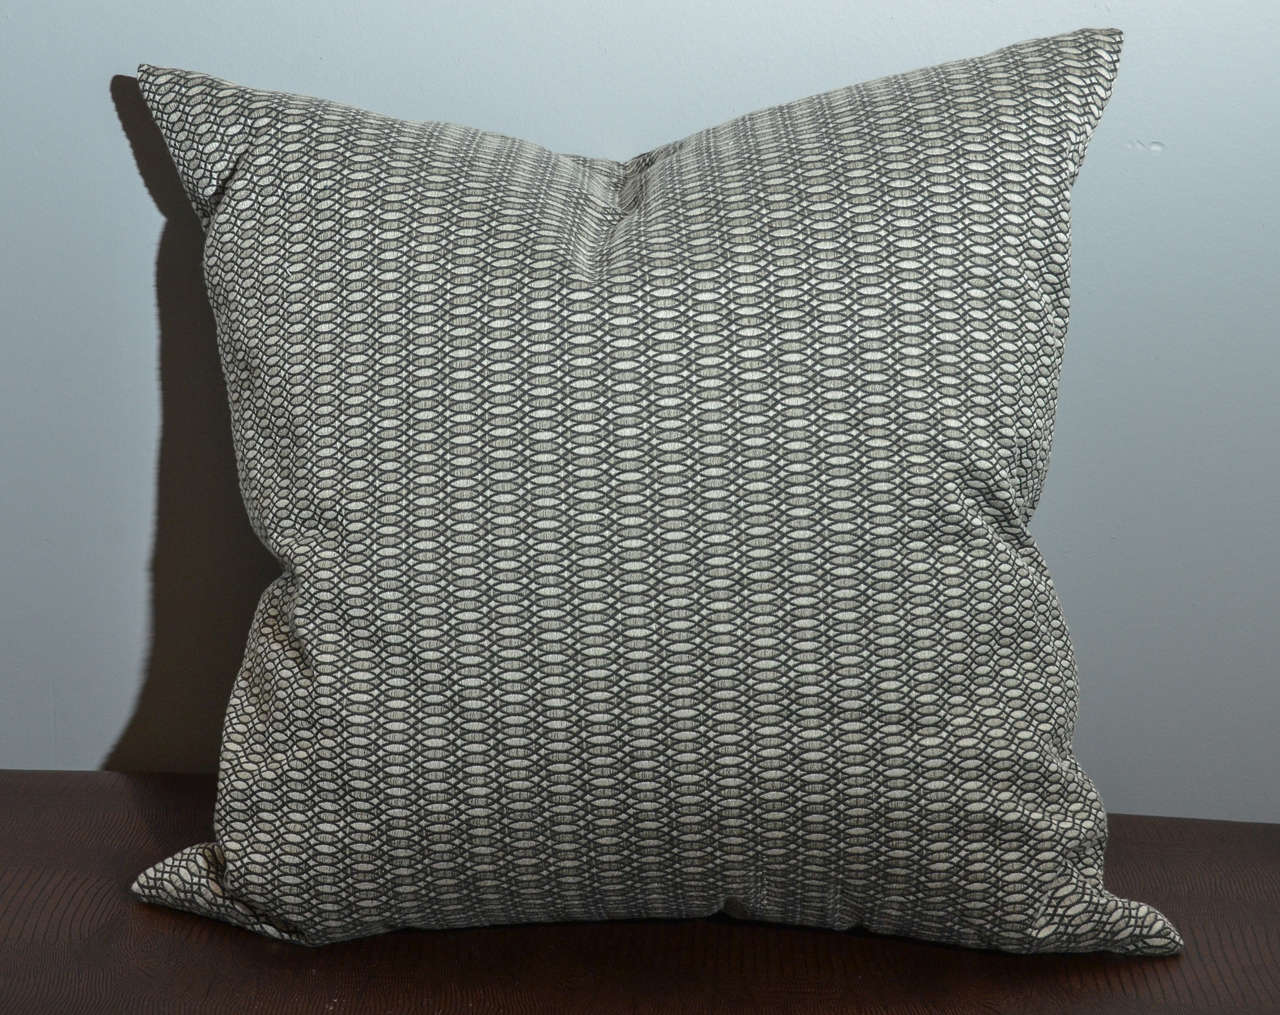 Viscoise silk modern tweed pillow. Excellent quality down blend insert.